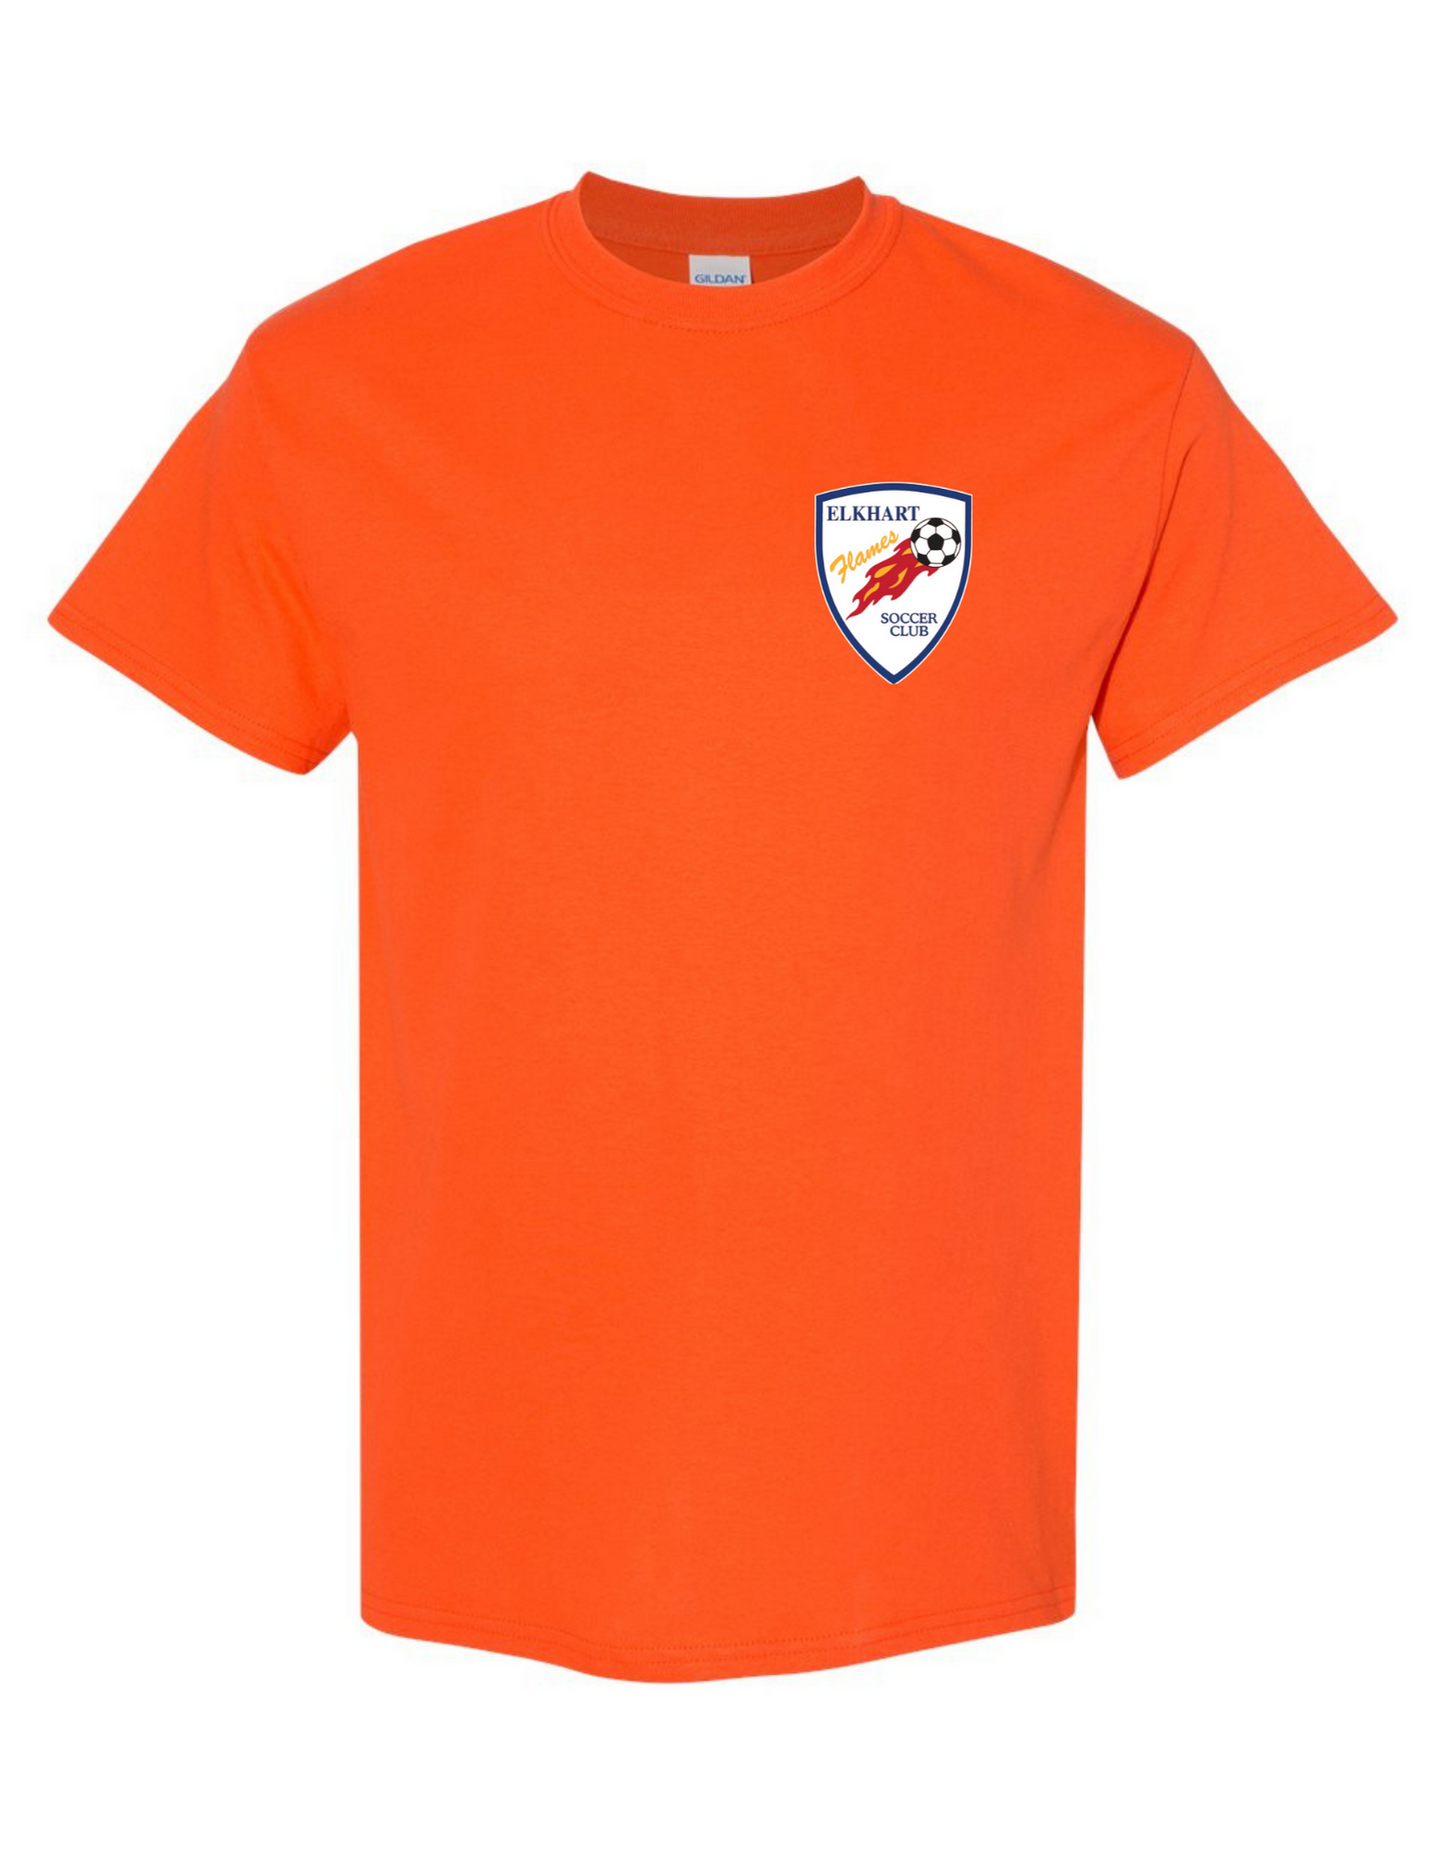 Elkhart Flames Soccer Club Logo Unisex Short Sleeve Tee - Youth